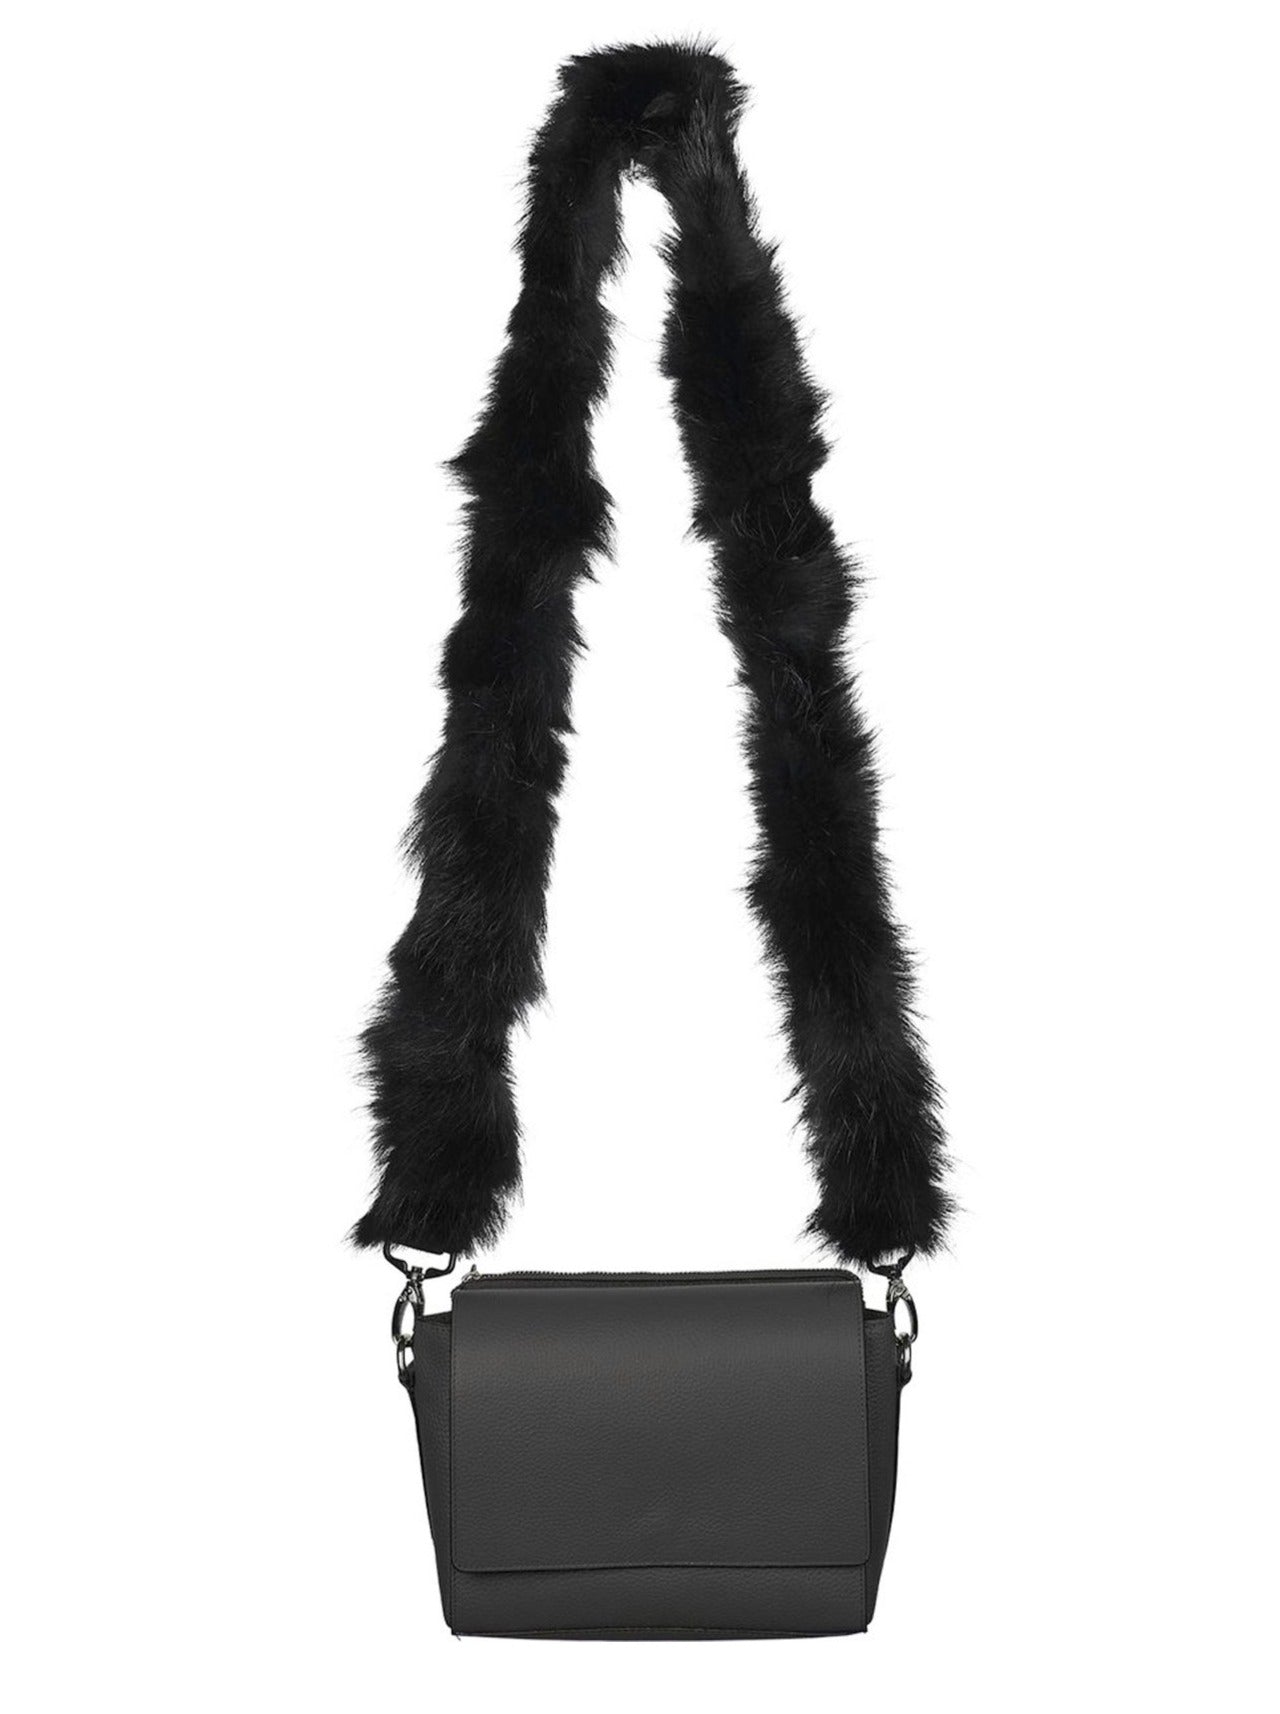 Crown 1 - Bag strap in fox fur